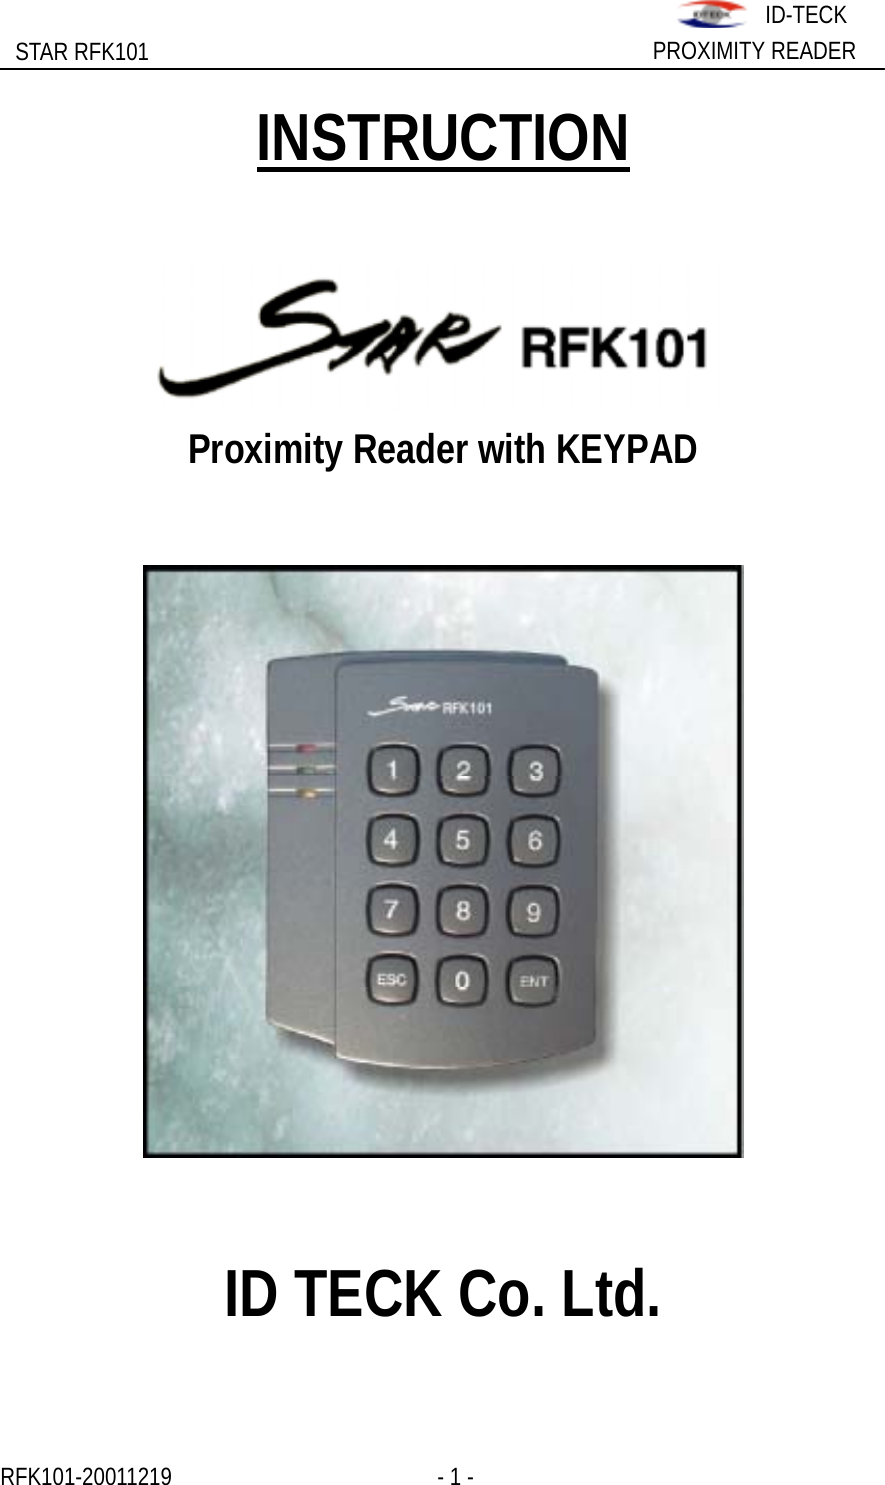                                                              STAR RFK101  PROXIMITY READER ID-TECKINSTRUCTION  Proximity Reader with KEYPAD      ID TECK Co. Ltd.RFK101-20011219                 - 1 -                    